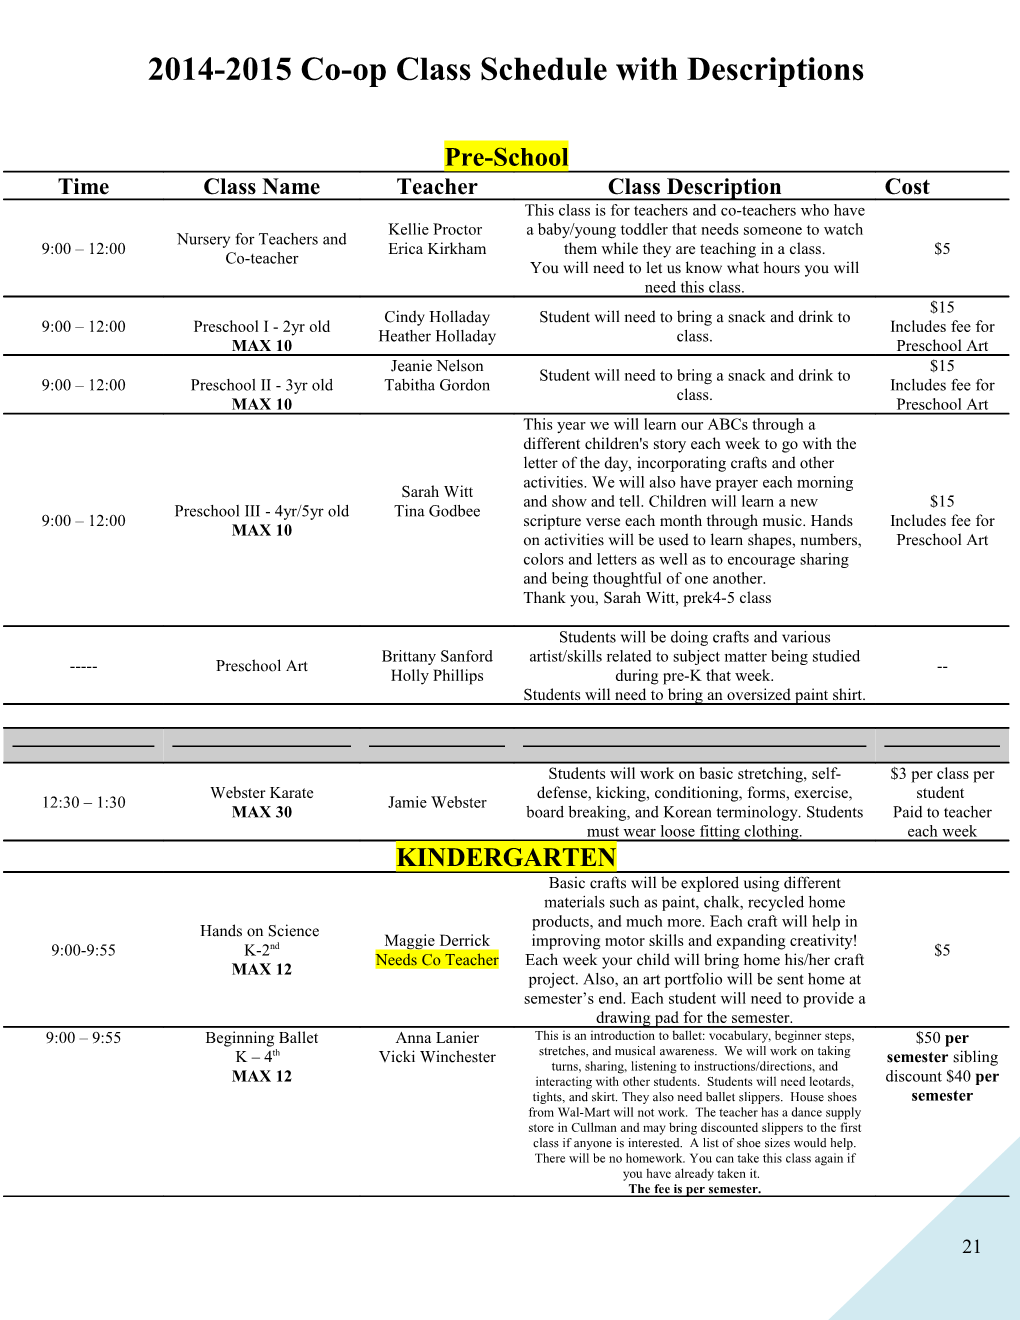 MHCS 2012-2013 Co-Op Class Schedule with Descriptions